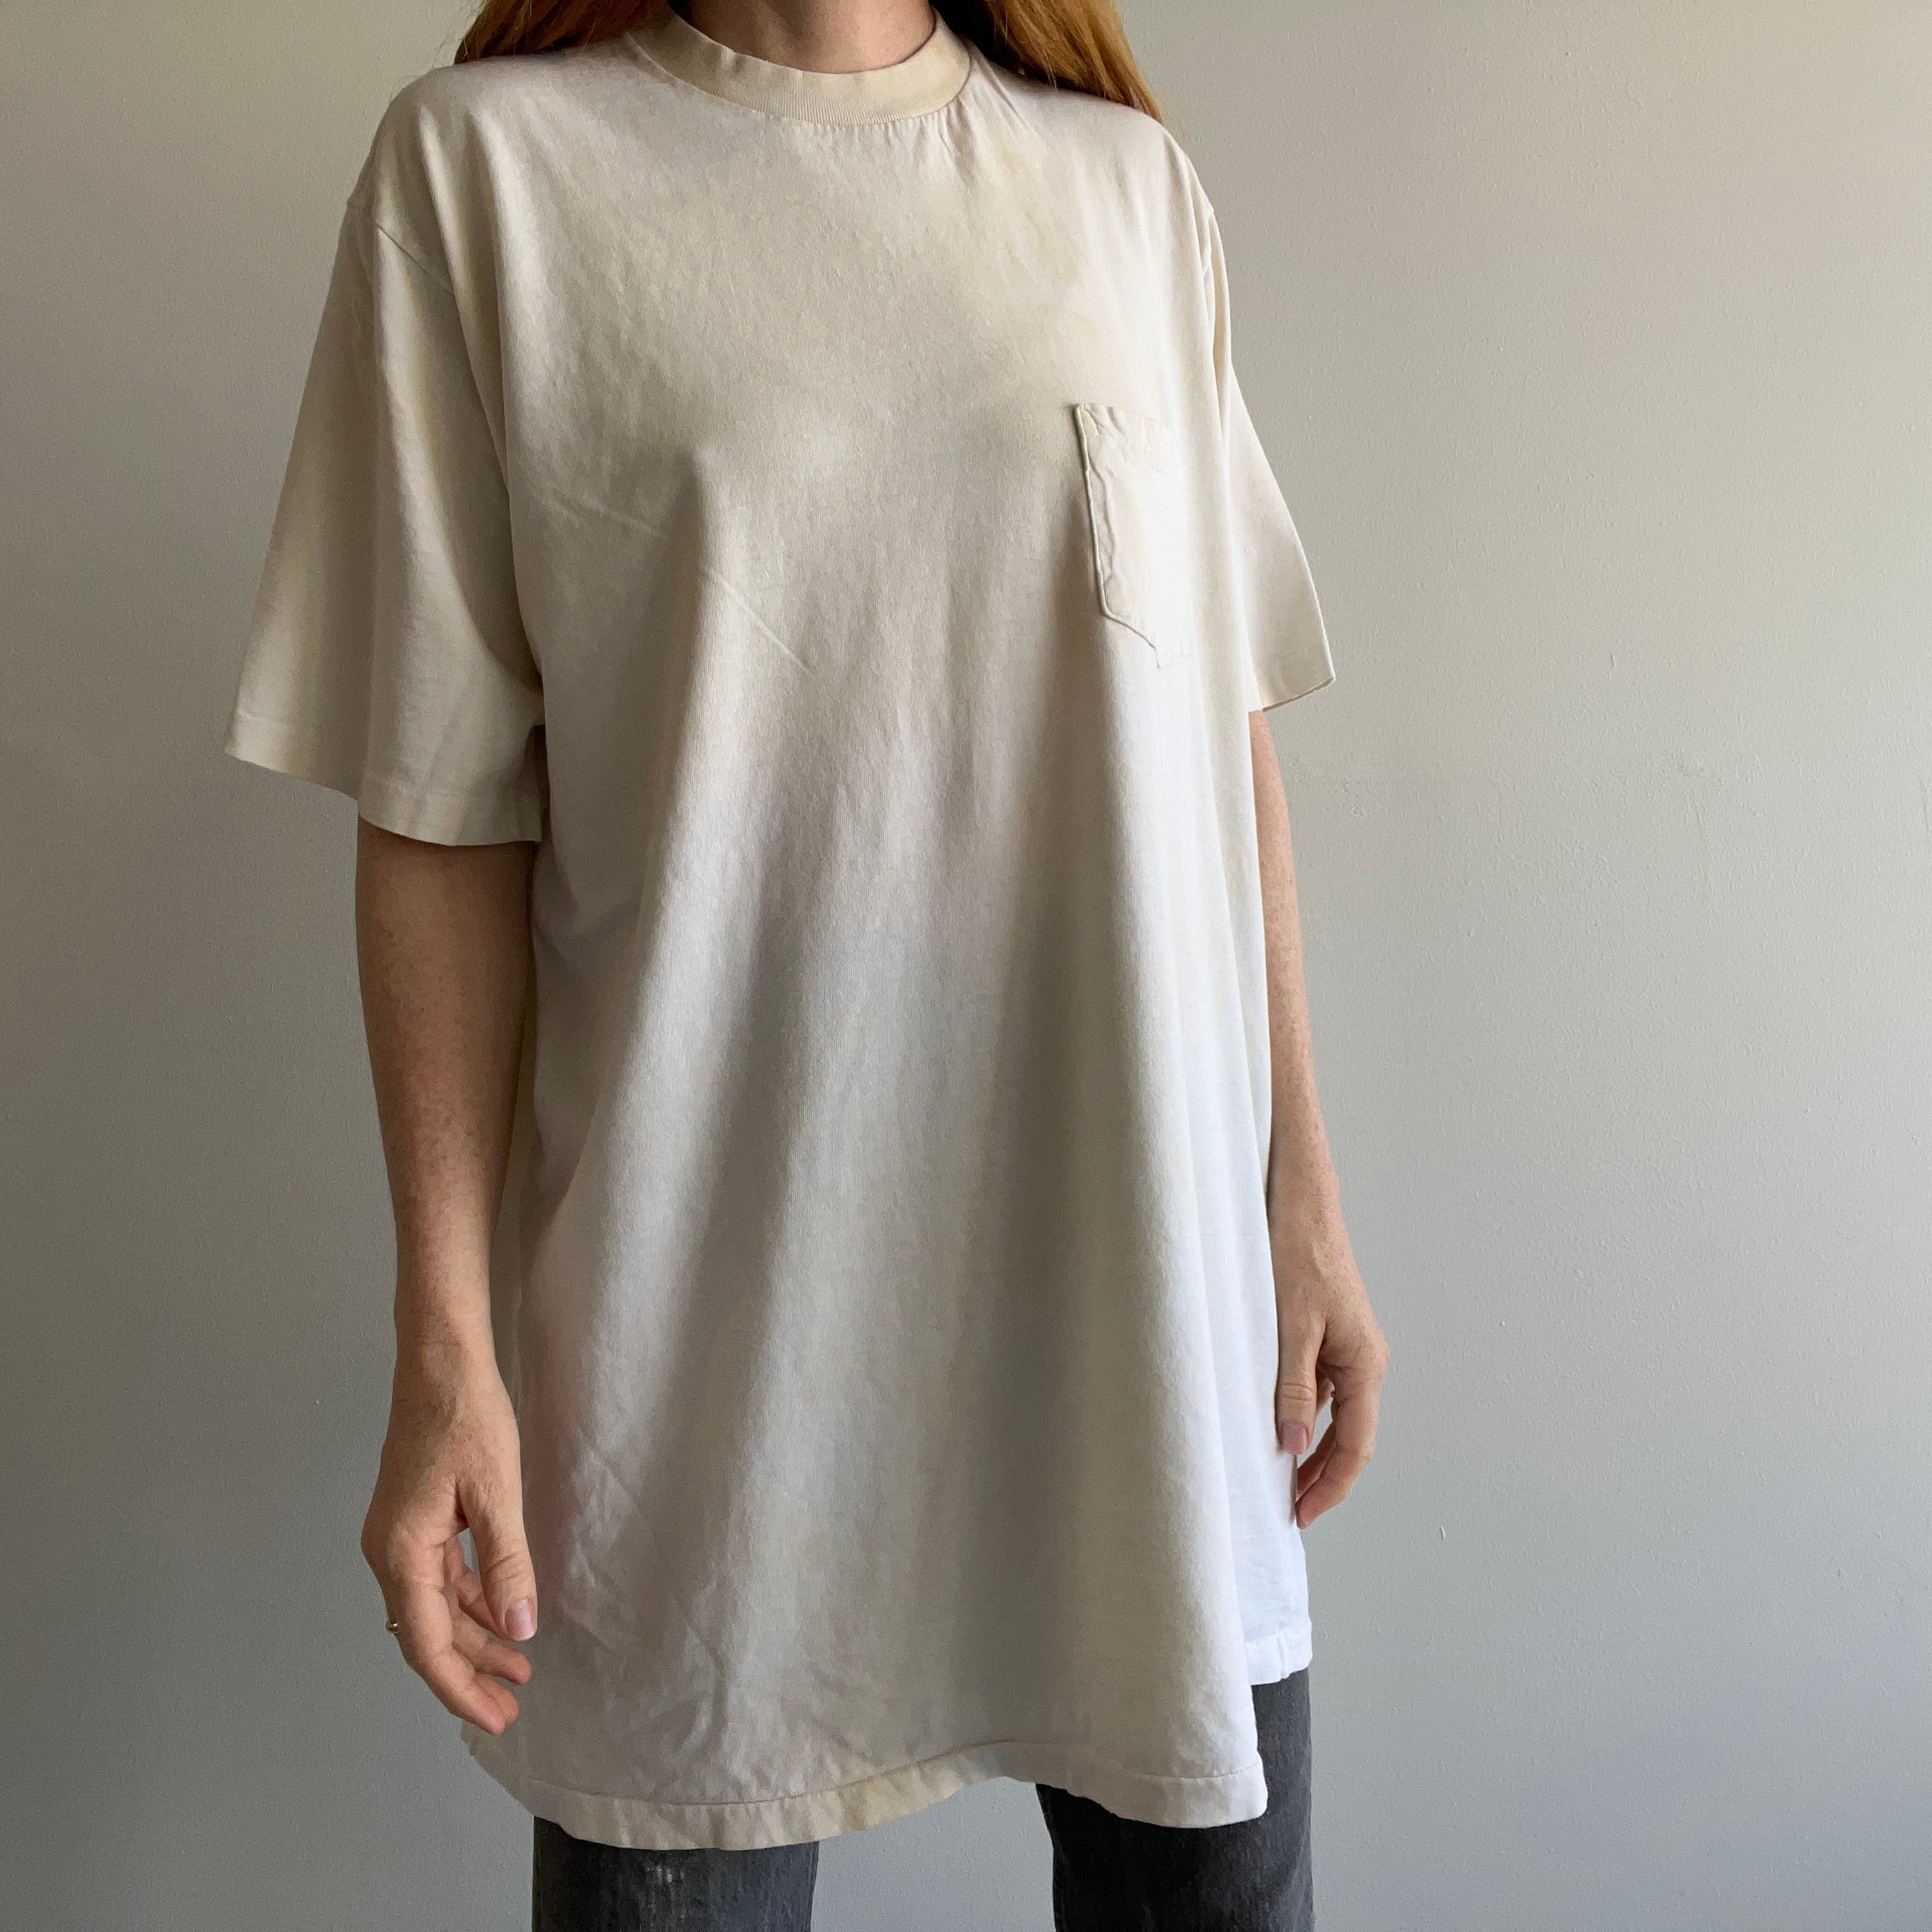 1990s Very Long Aged Ecru/White Pocket T-Shirt Dress?